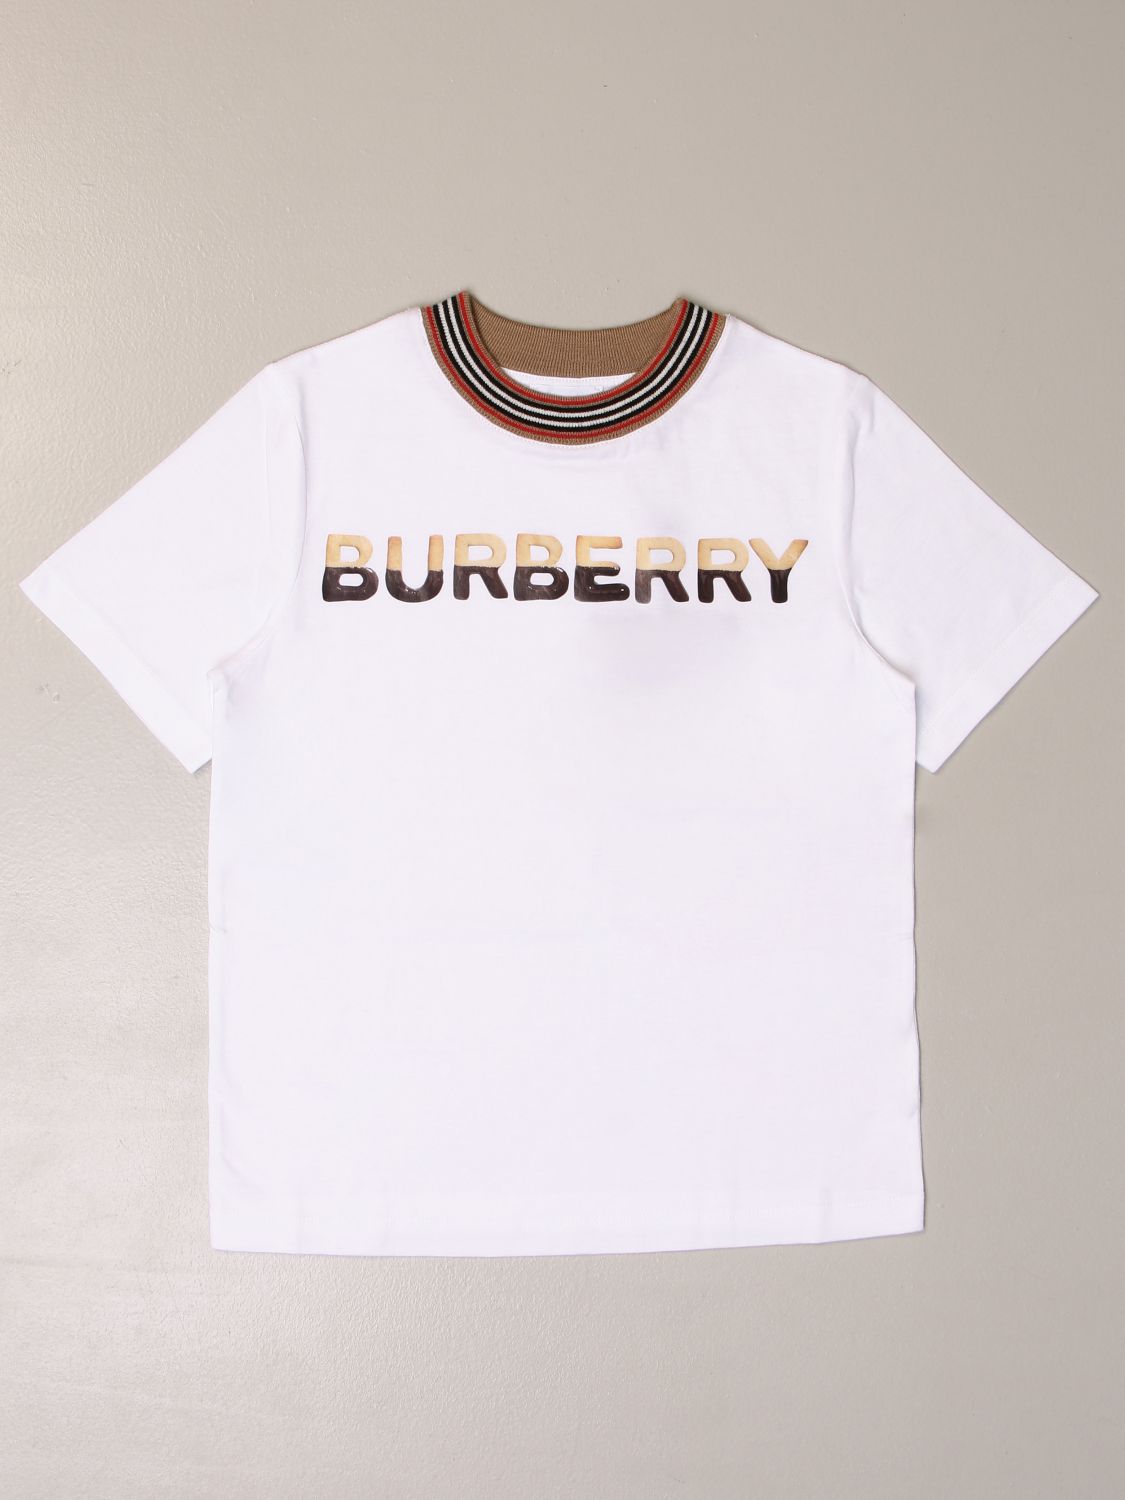 burberry shirt for kids